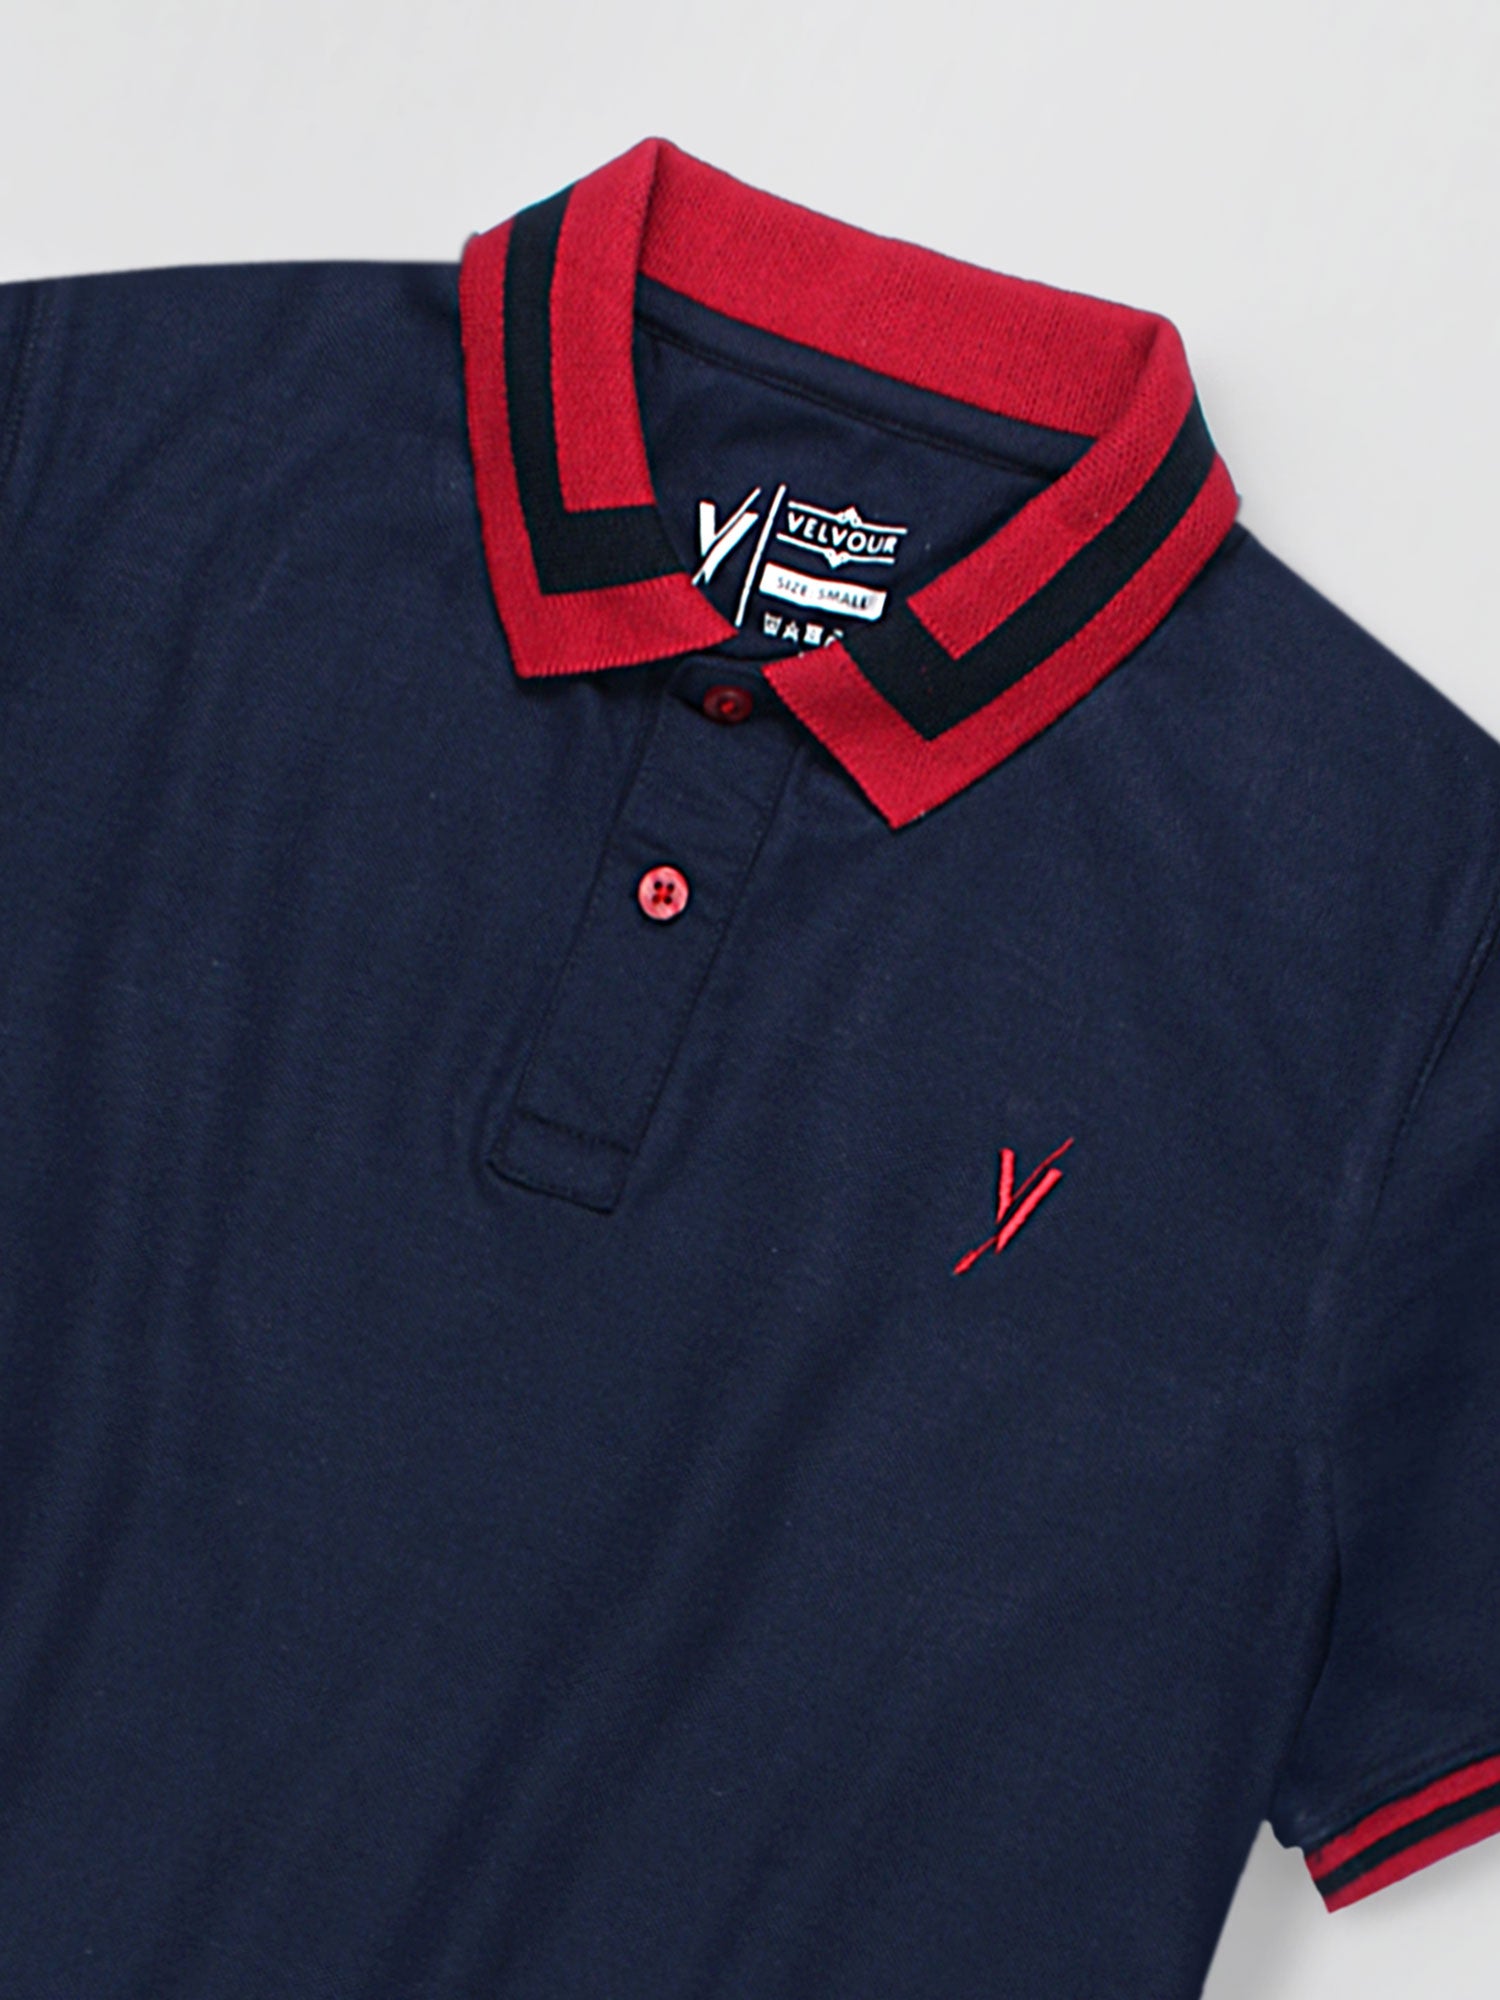 Mens Polo Shirt (Short Sleeve) By Velvour Art# VMP01-A/NB - Velvour Shop